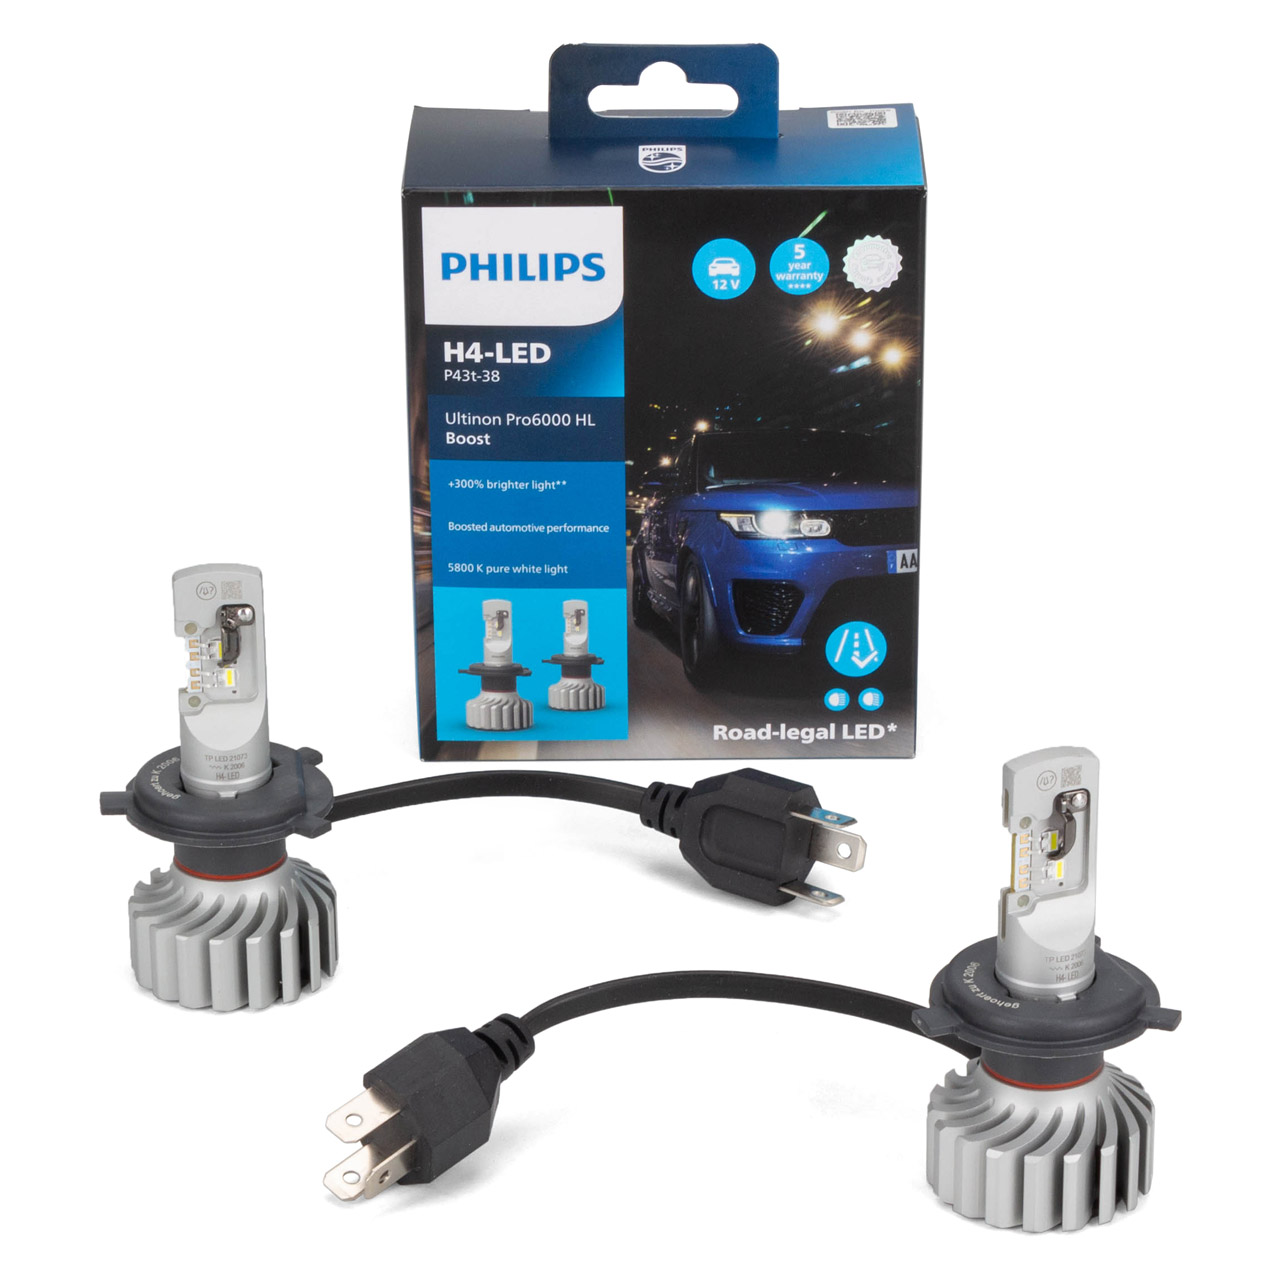 2x PHILIPS Ultinon Pro6000 HL Boost H4 LED mit Straßenzulassung 12V +300% 5.800K